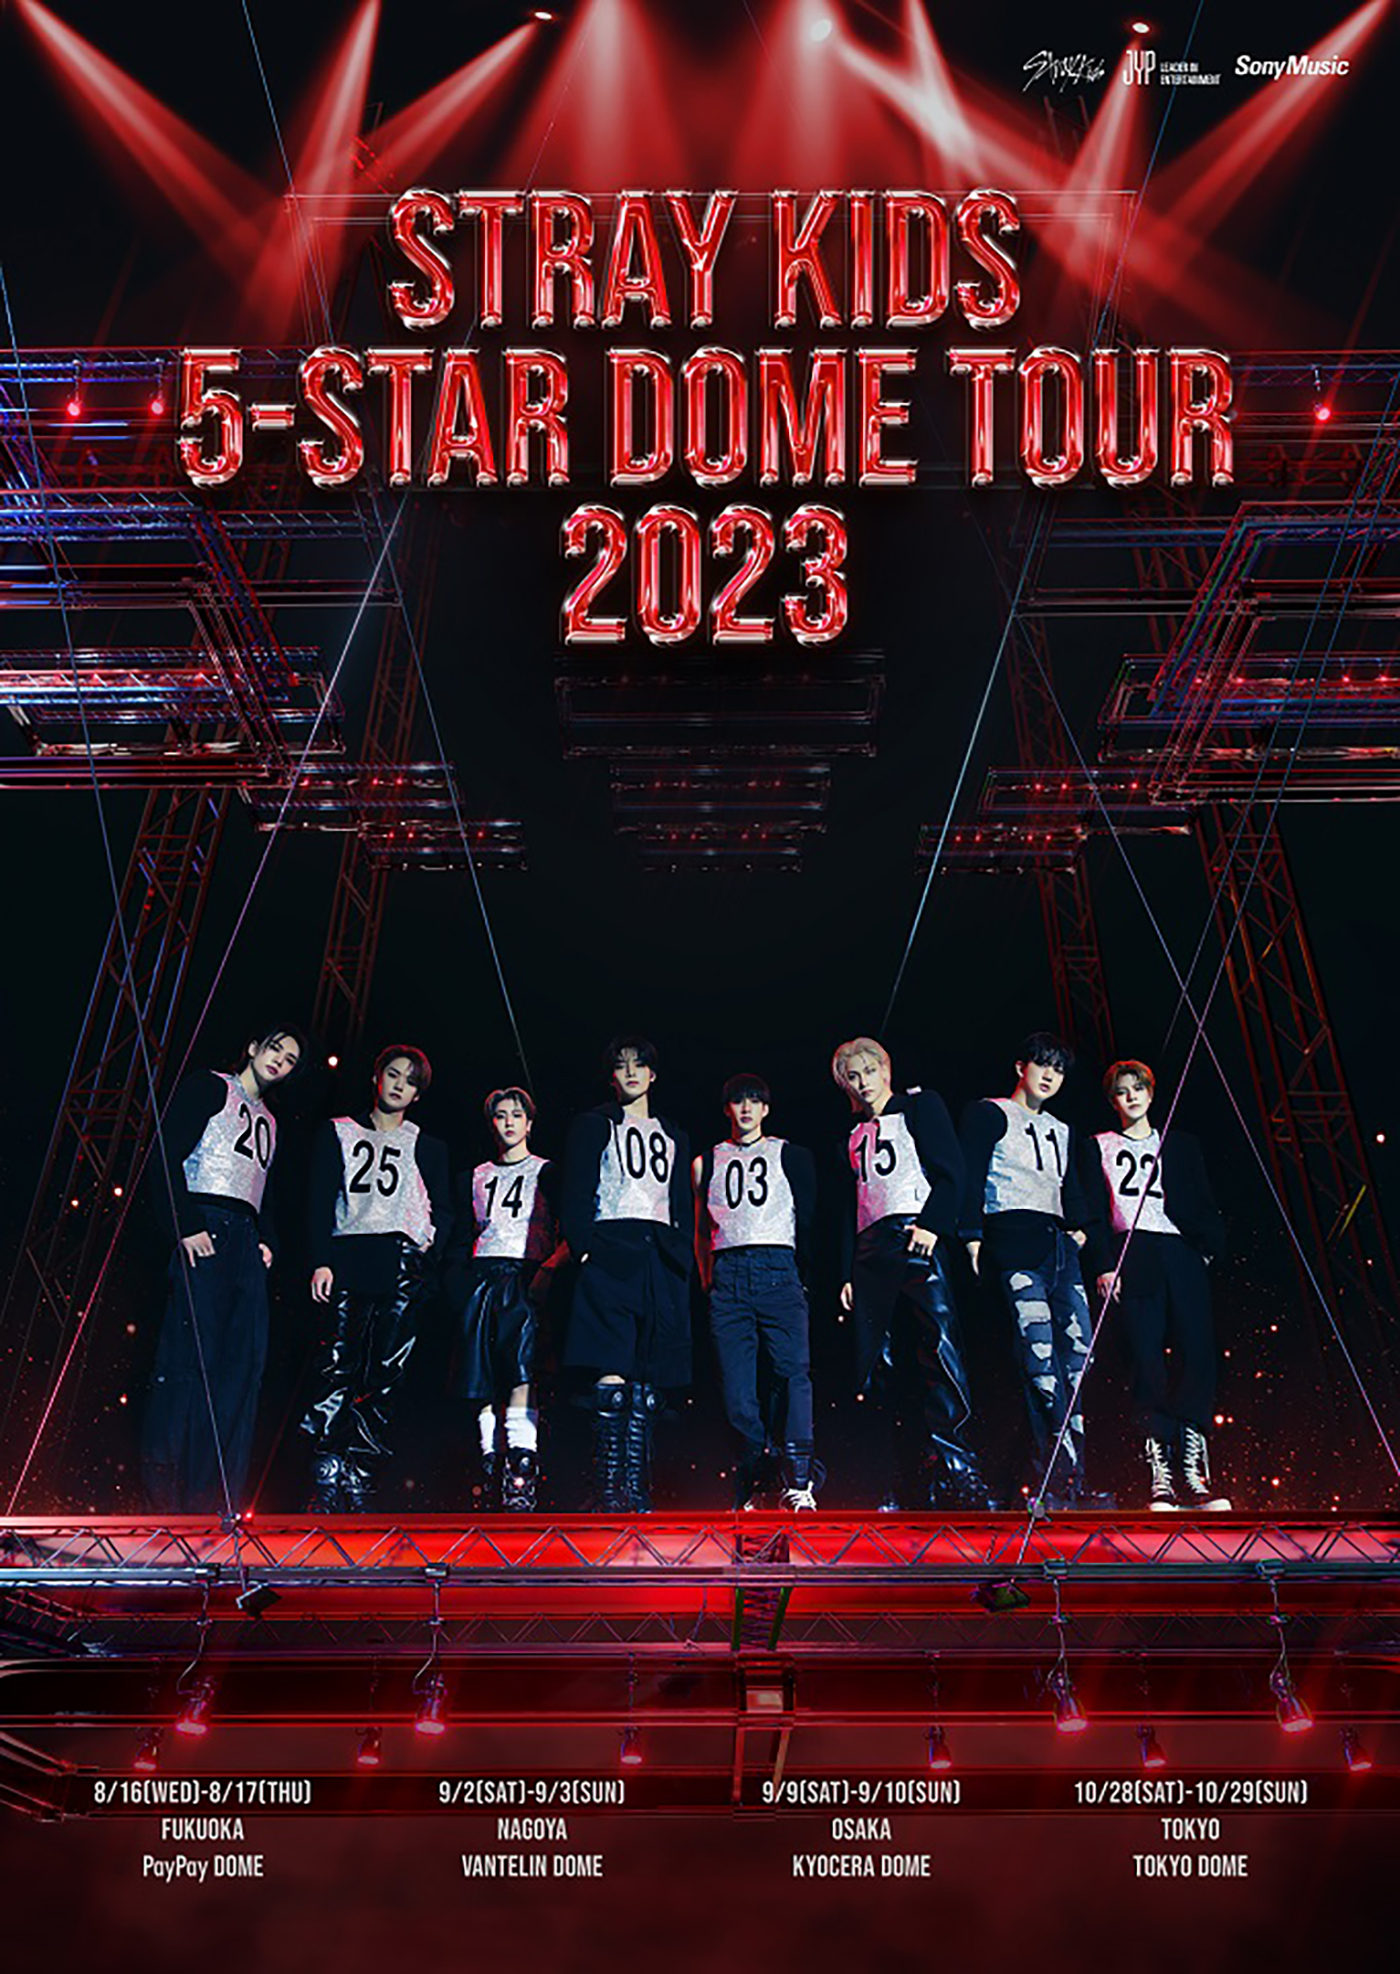 5 star dome tour 2023 seoul special